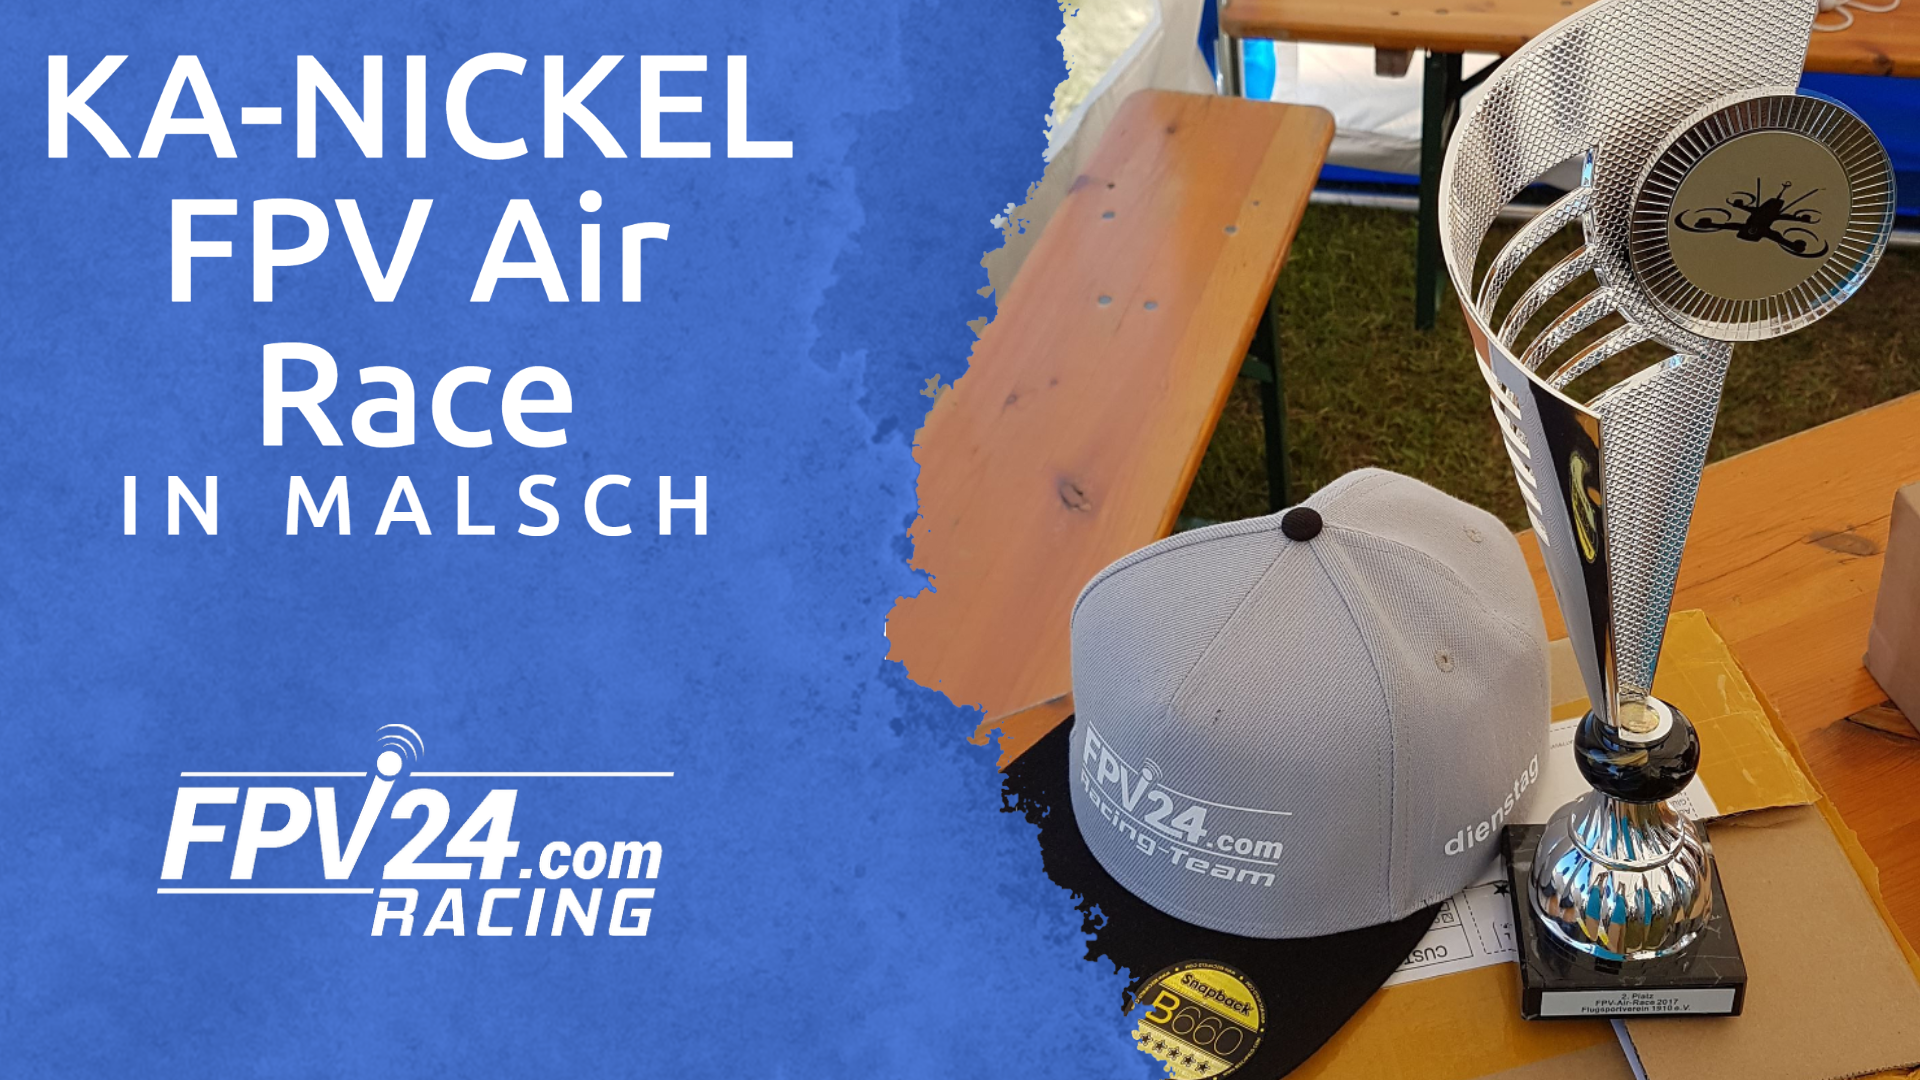 KA-NICKEL FPV Air Race in Malsch